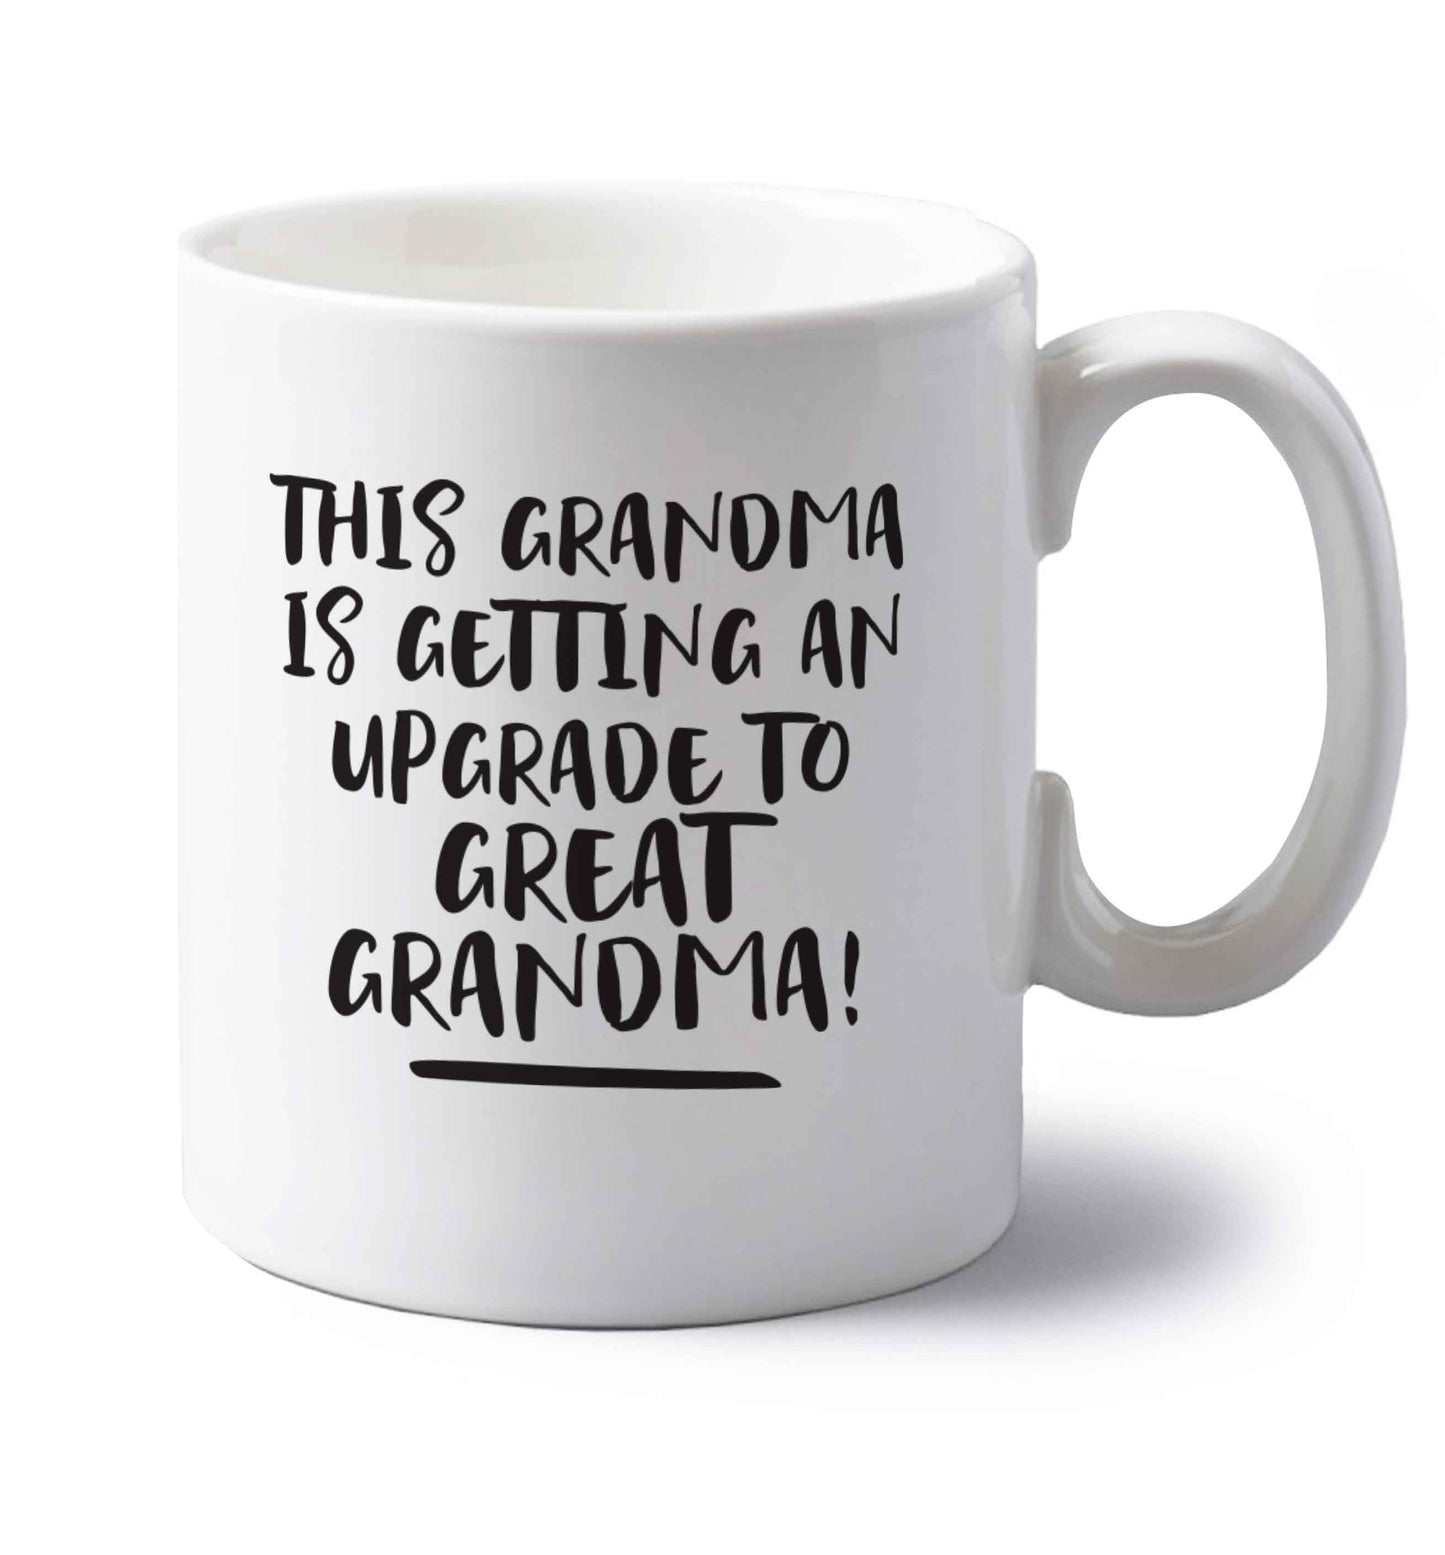 This grandma is getting an upgrade to great grandma! left handed white ceramic mug 